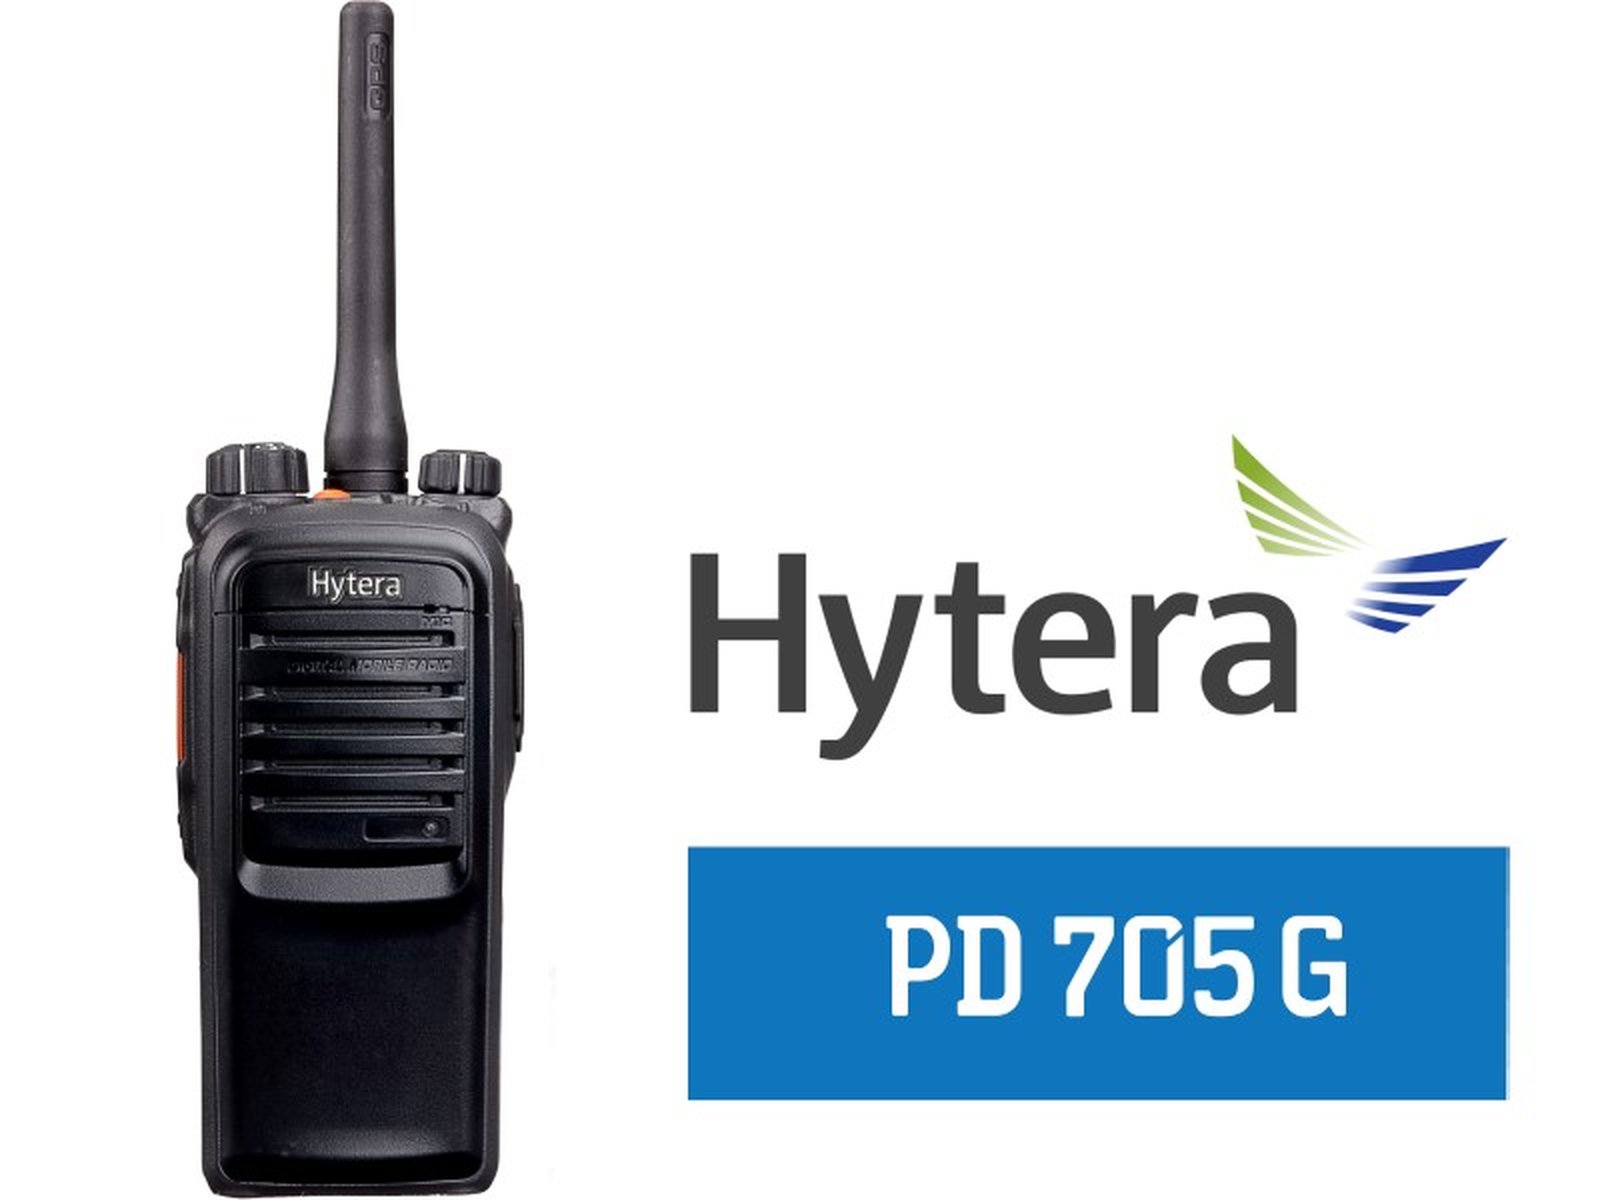 Hytera PD705G GPS